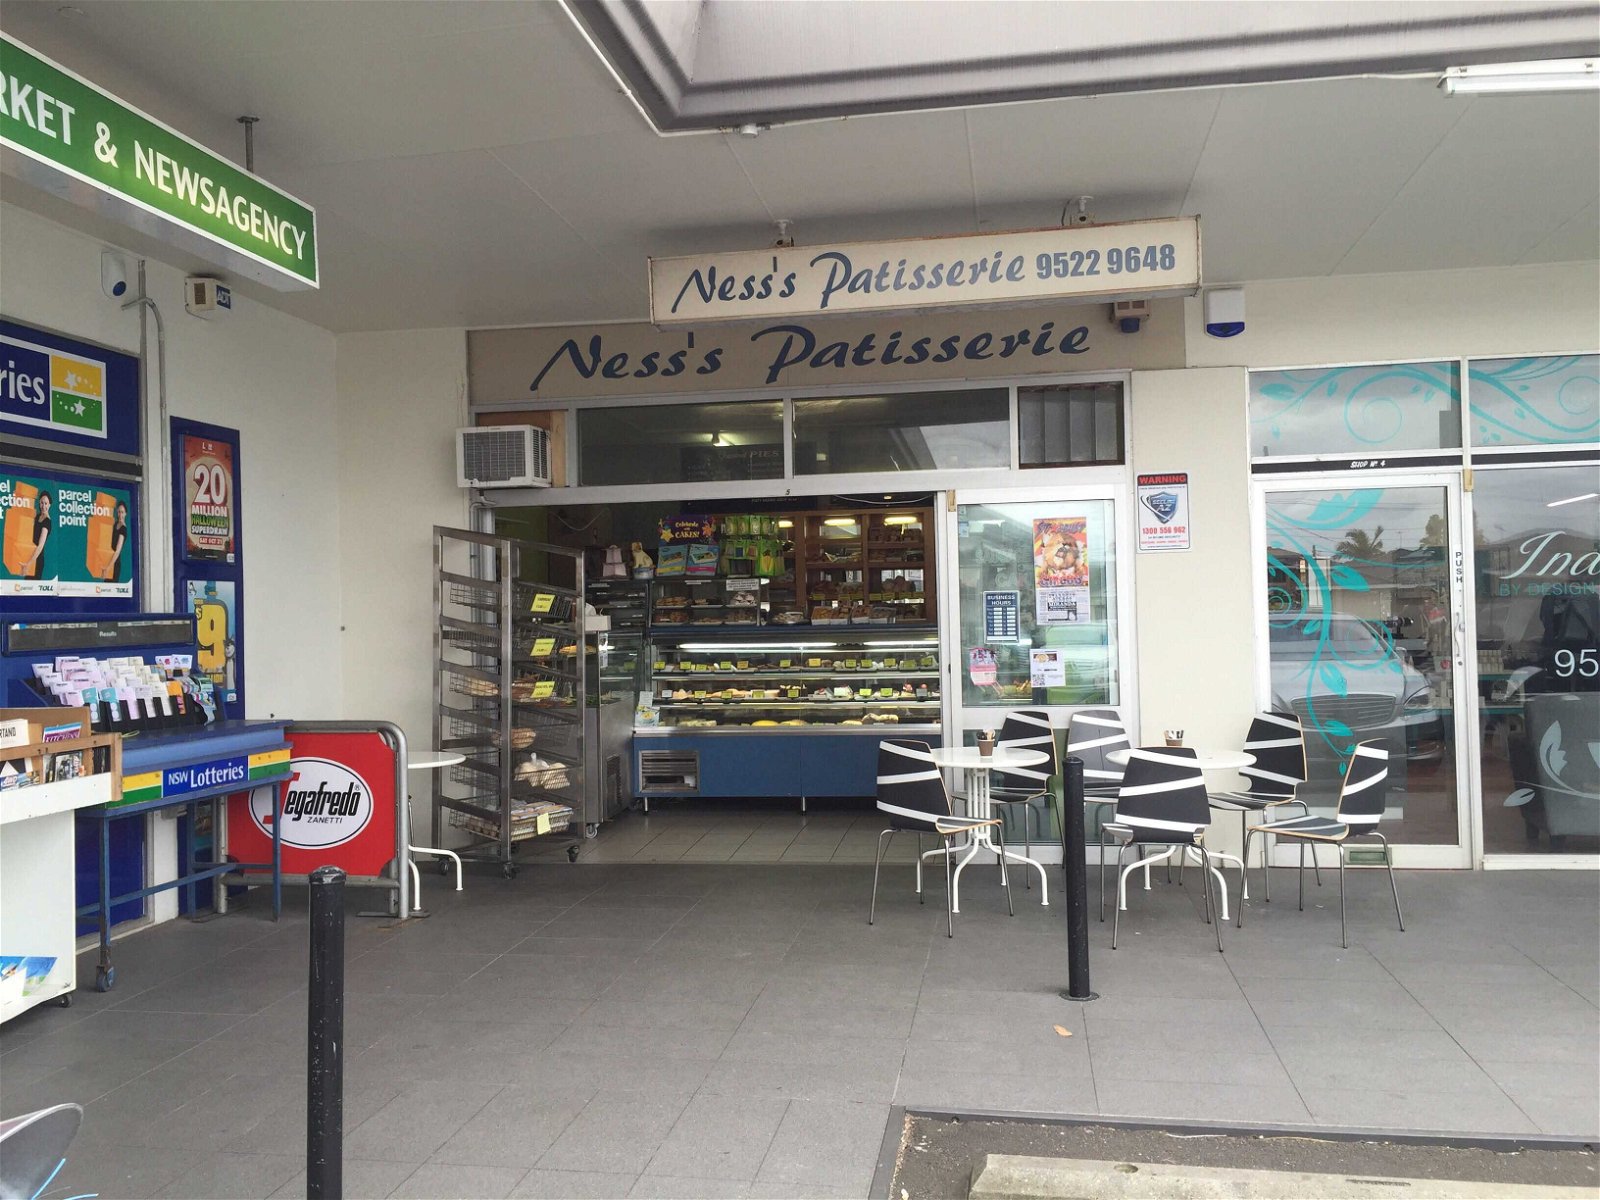 Ness's Patisserie - Sydney Tourism